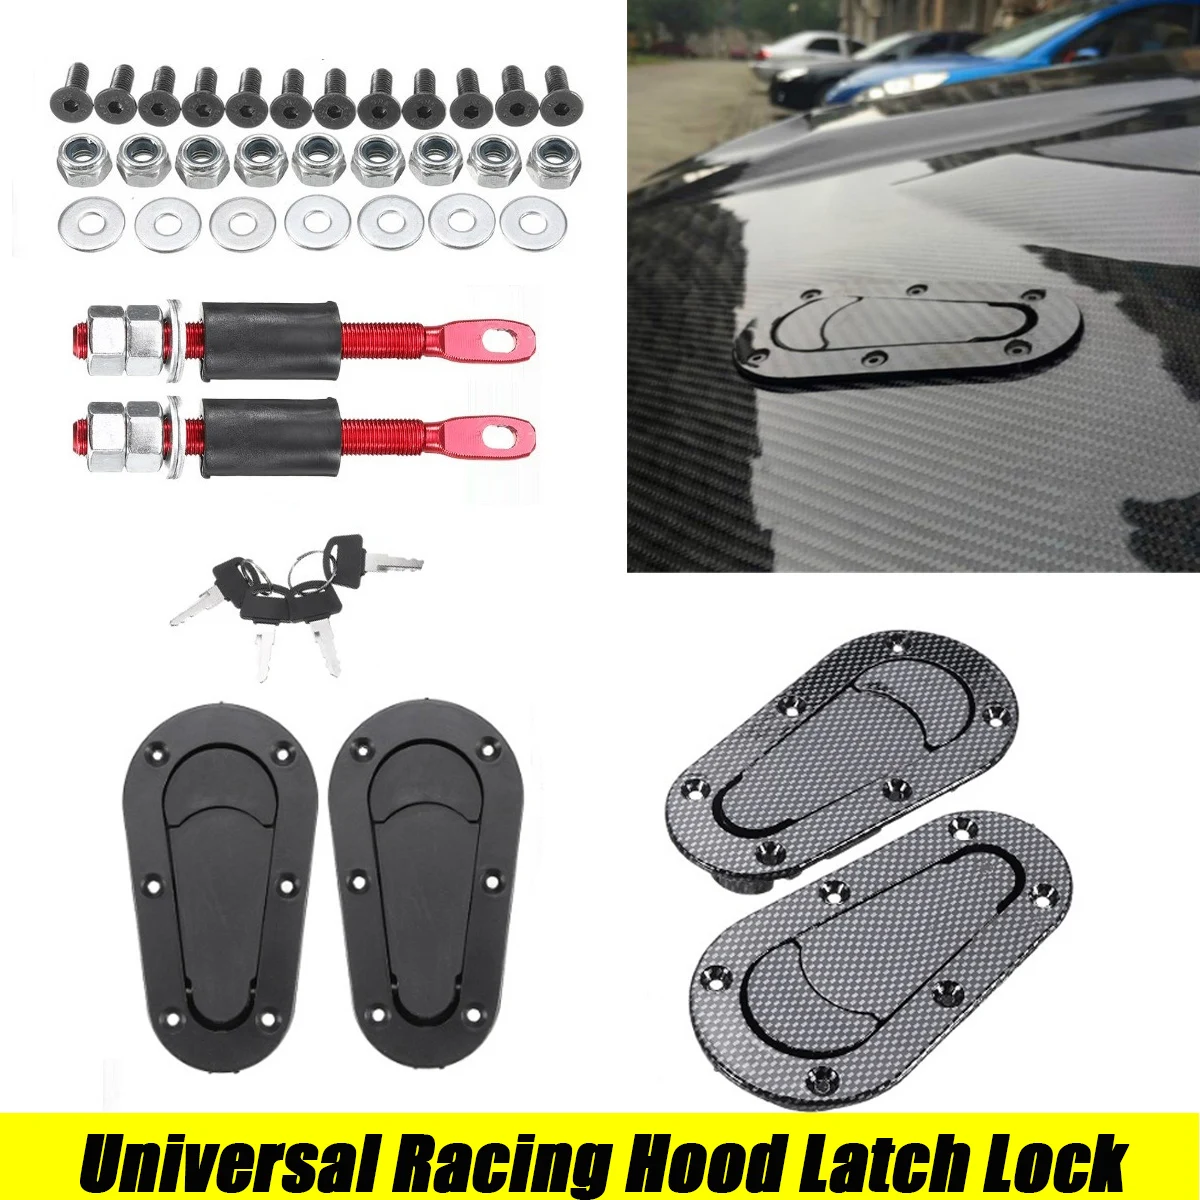 Black Universal Racing Car Hood Pin Engine Bonnet Latch Lock Mount Kit Refitting w/ Keys Car Accessories Safety Protection